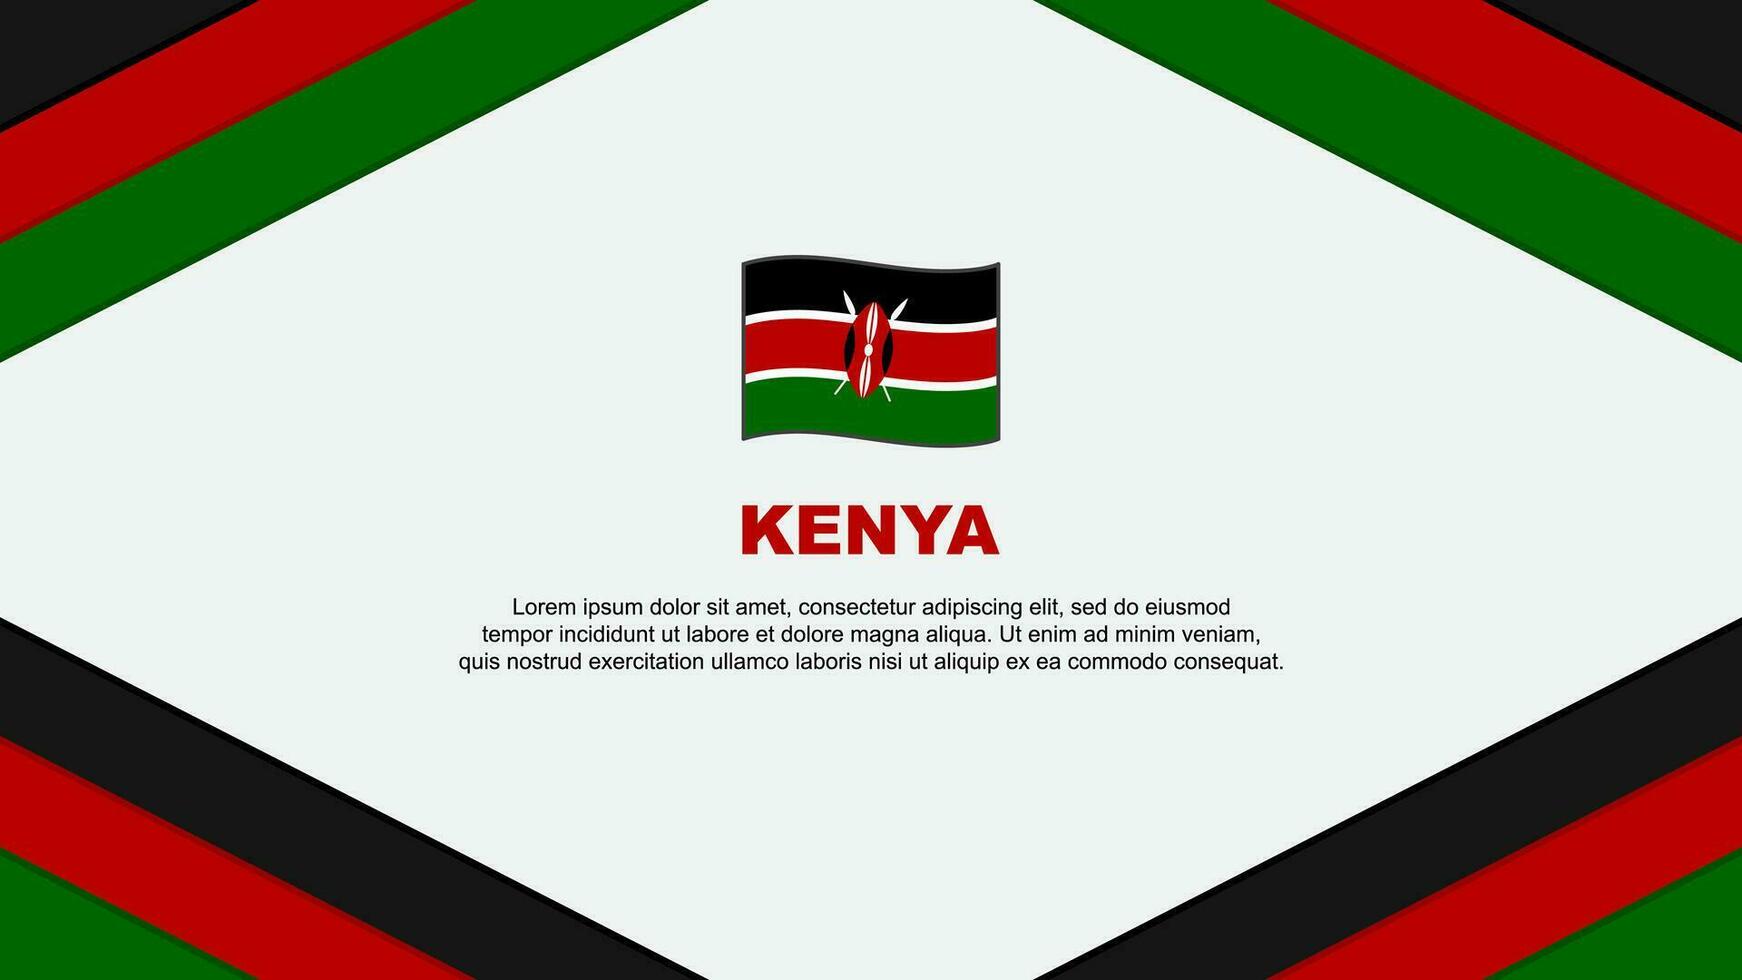 Kenya Flag Abstract Background Design Template. Kenya Independence Day Banner Cartoon Vector Illustration. Kenya Template